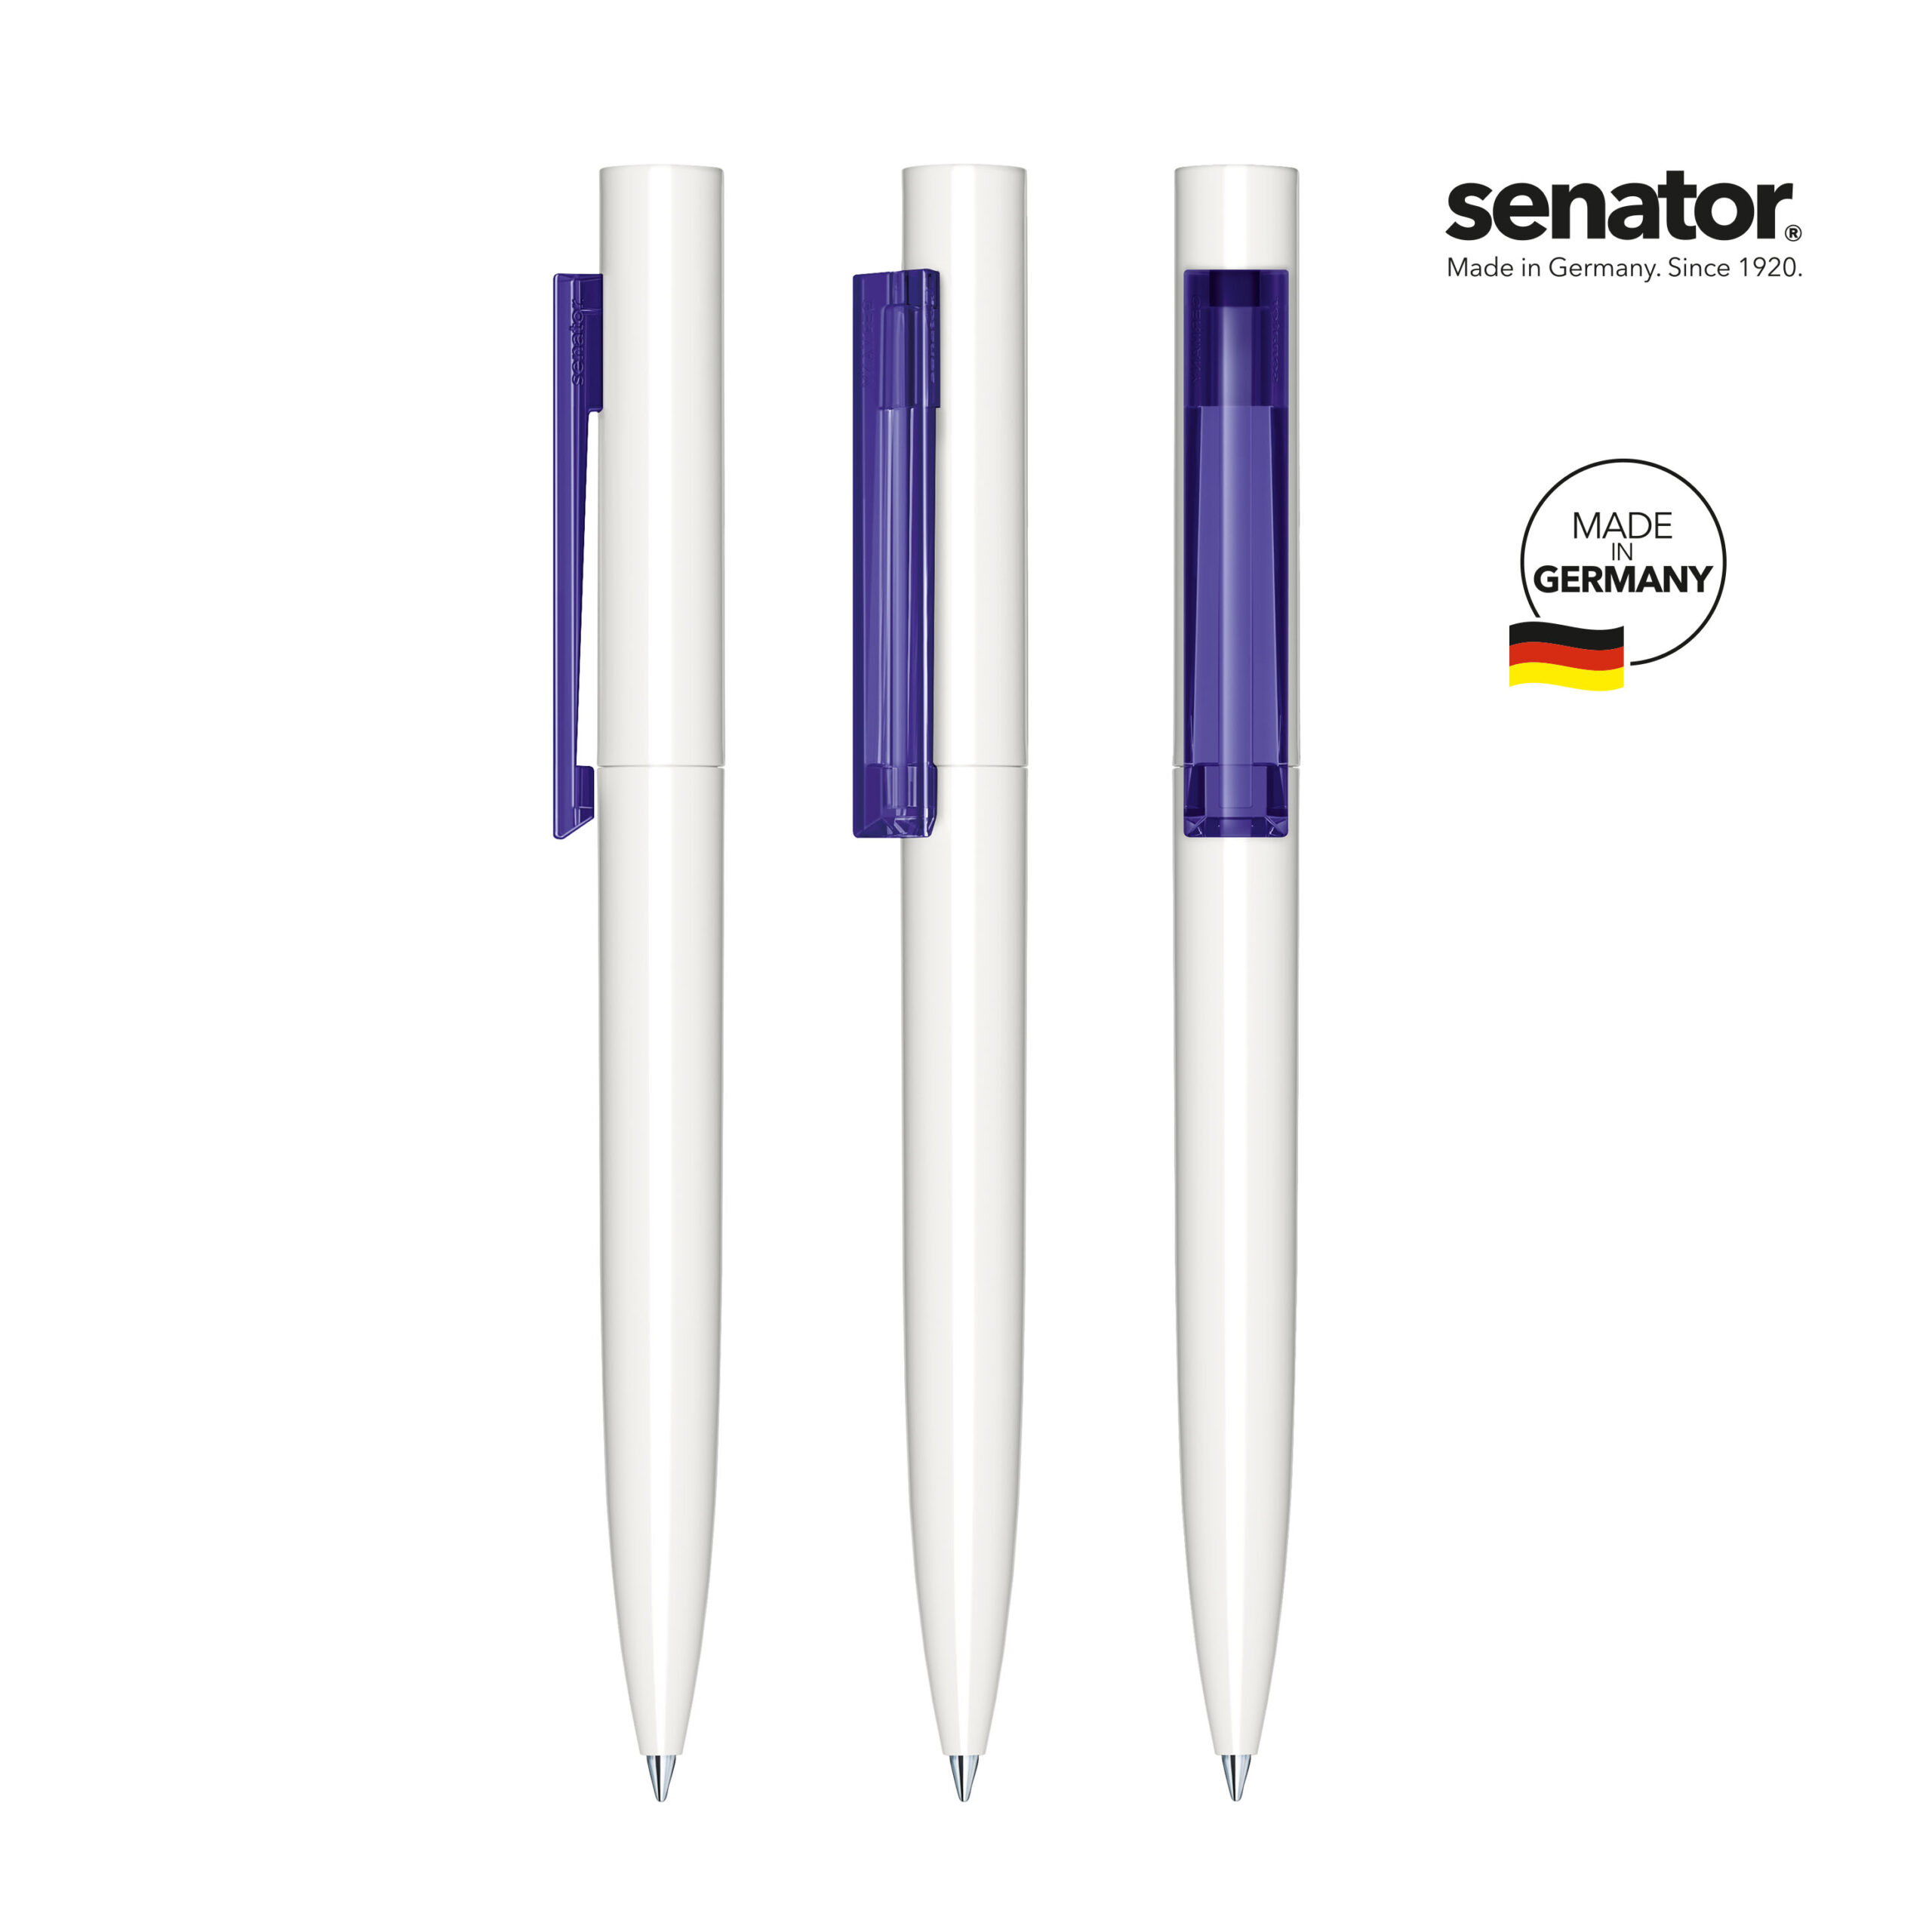 3280-senator-headliner-polished-basic-pms-267-5-p